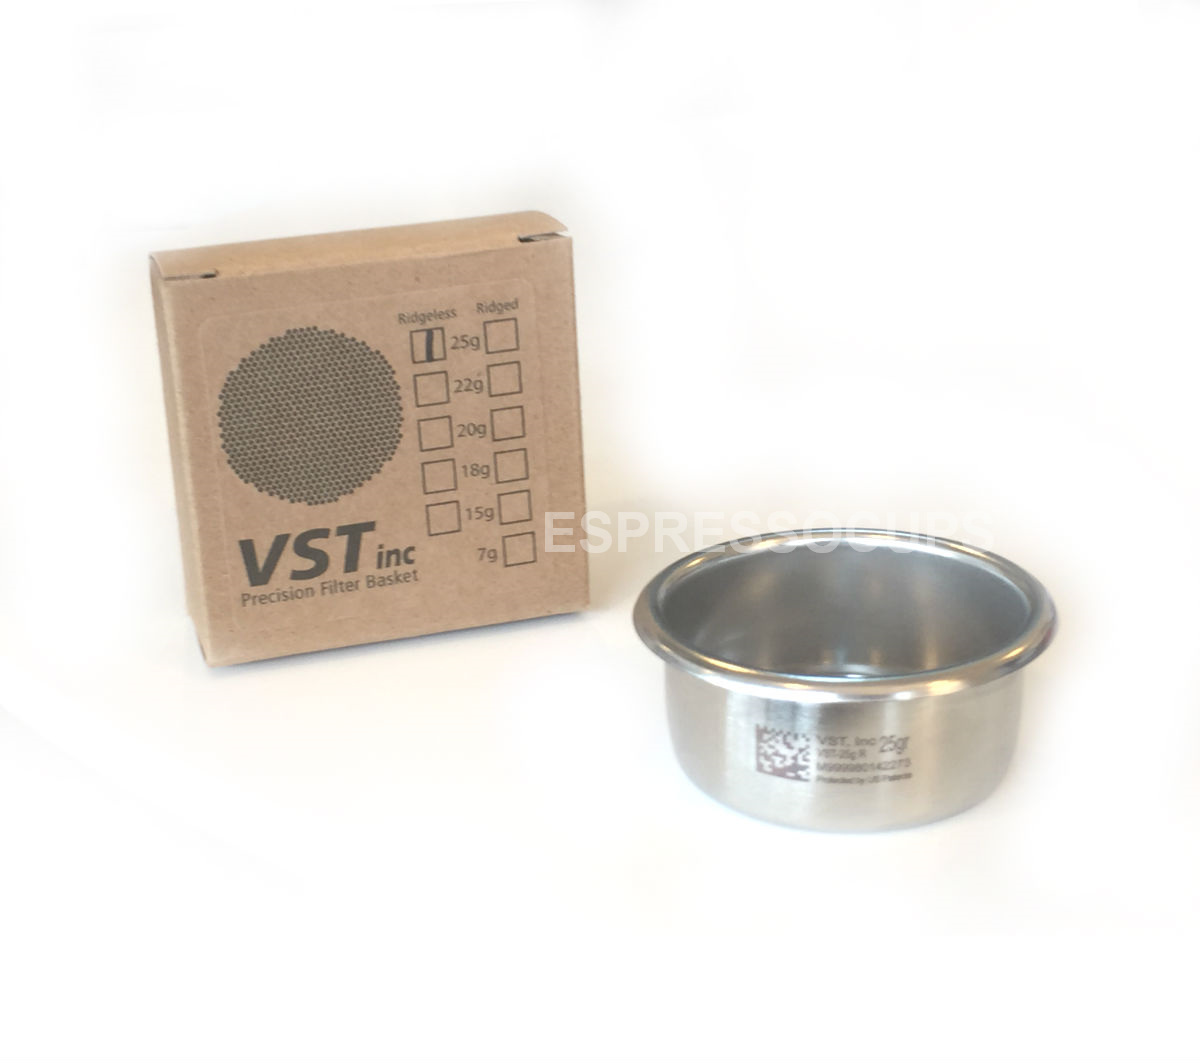 VST Precision Basket 25g - ridgeless